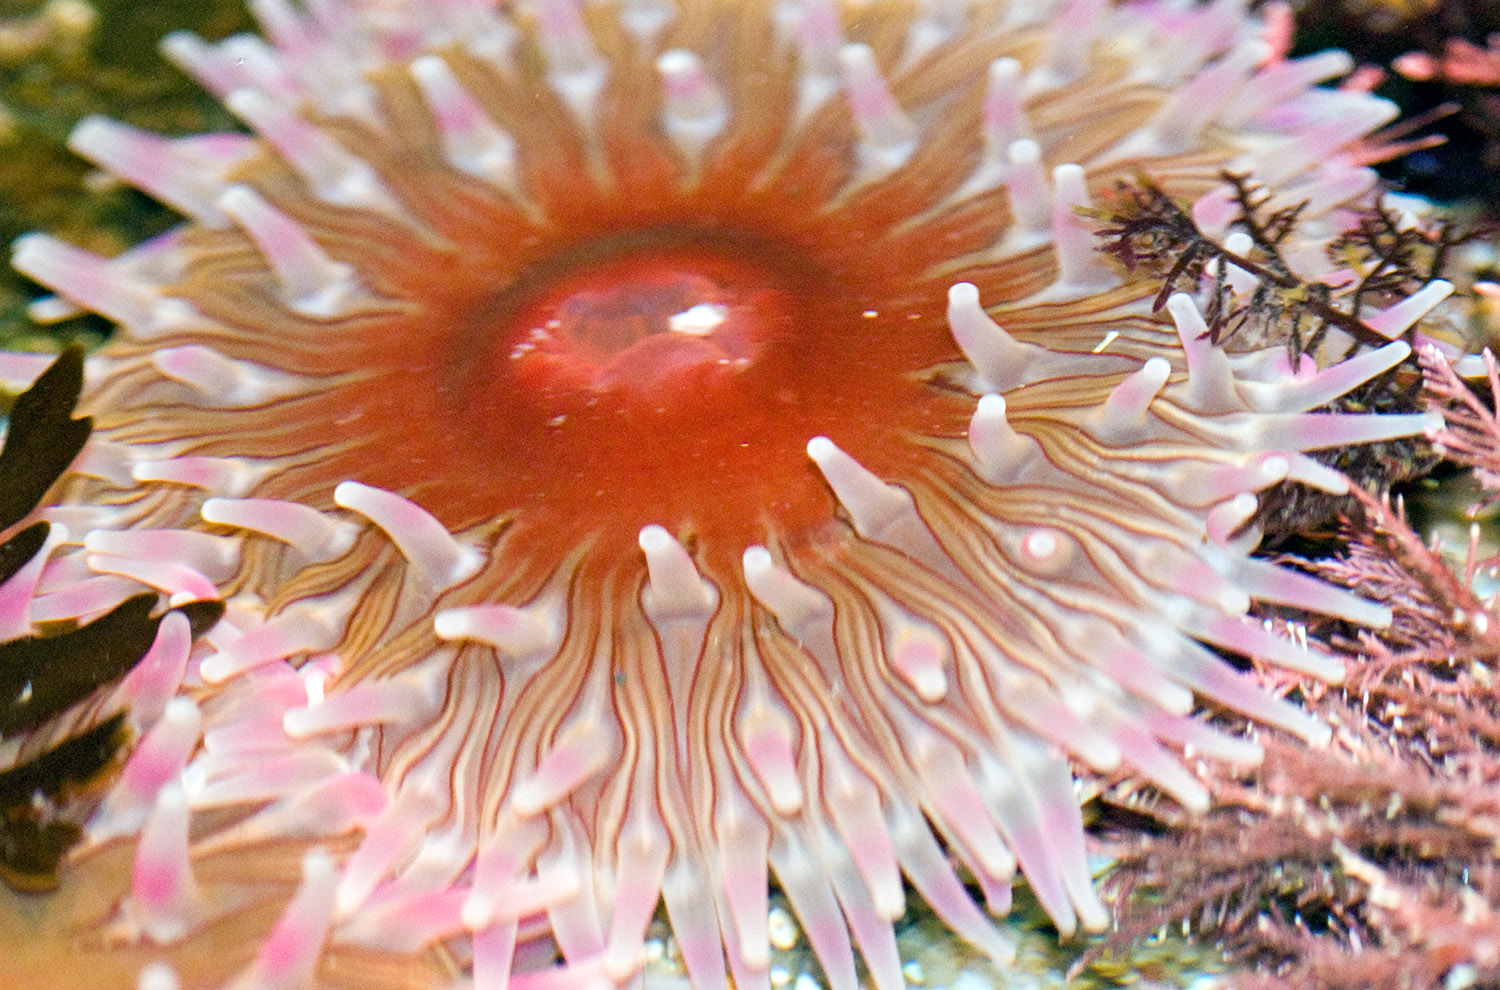 sea-anemone-photo-image-038.jpg